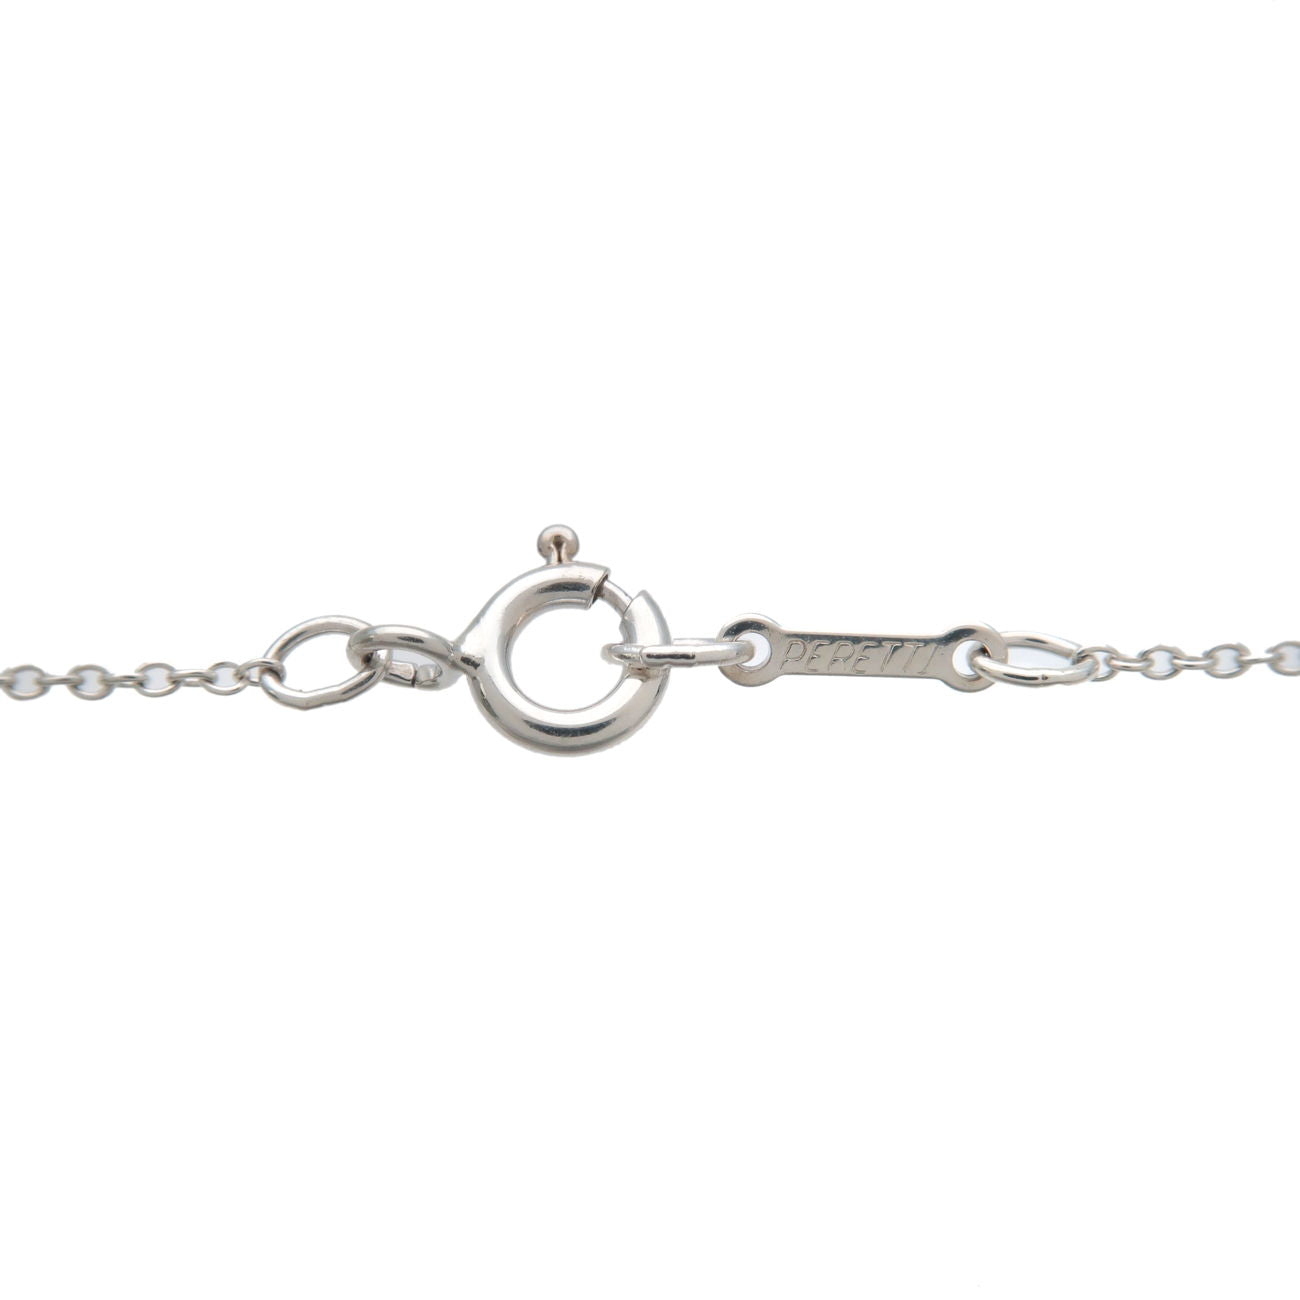 Tiffany&Co. Small Cross Pendant Necklace SV925 Silver